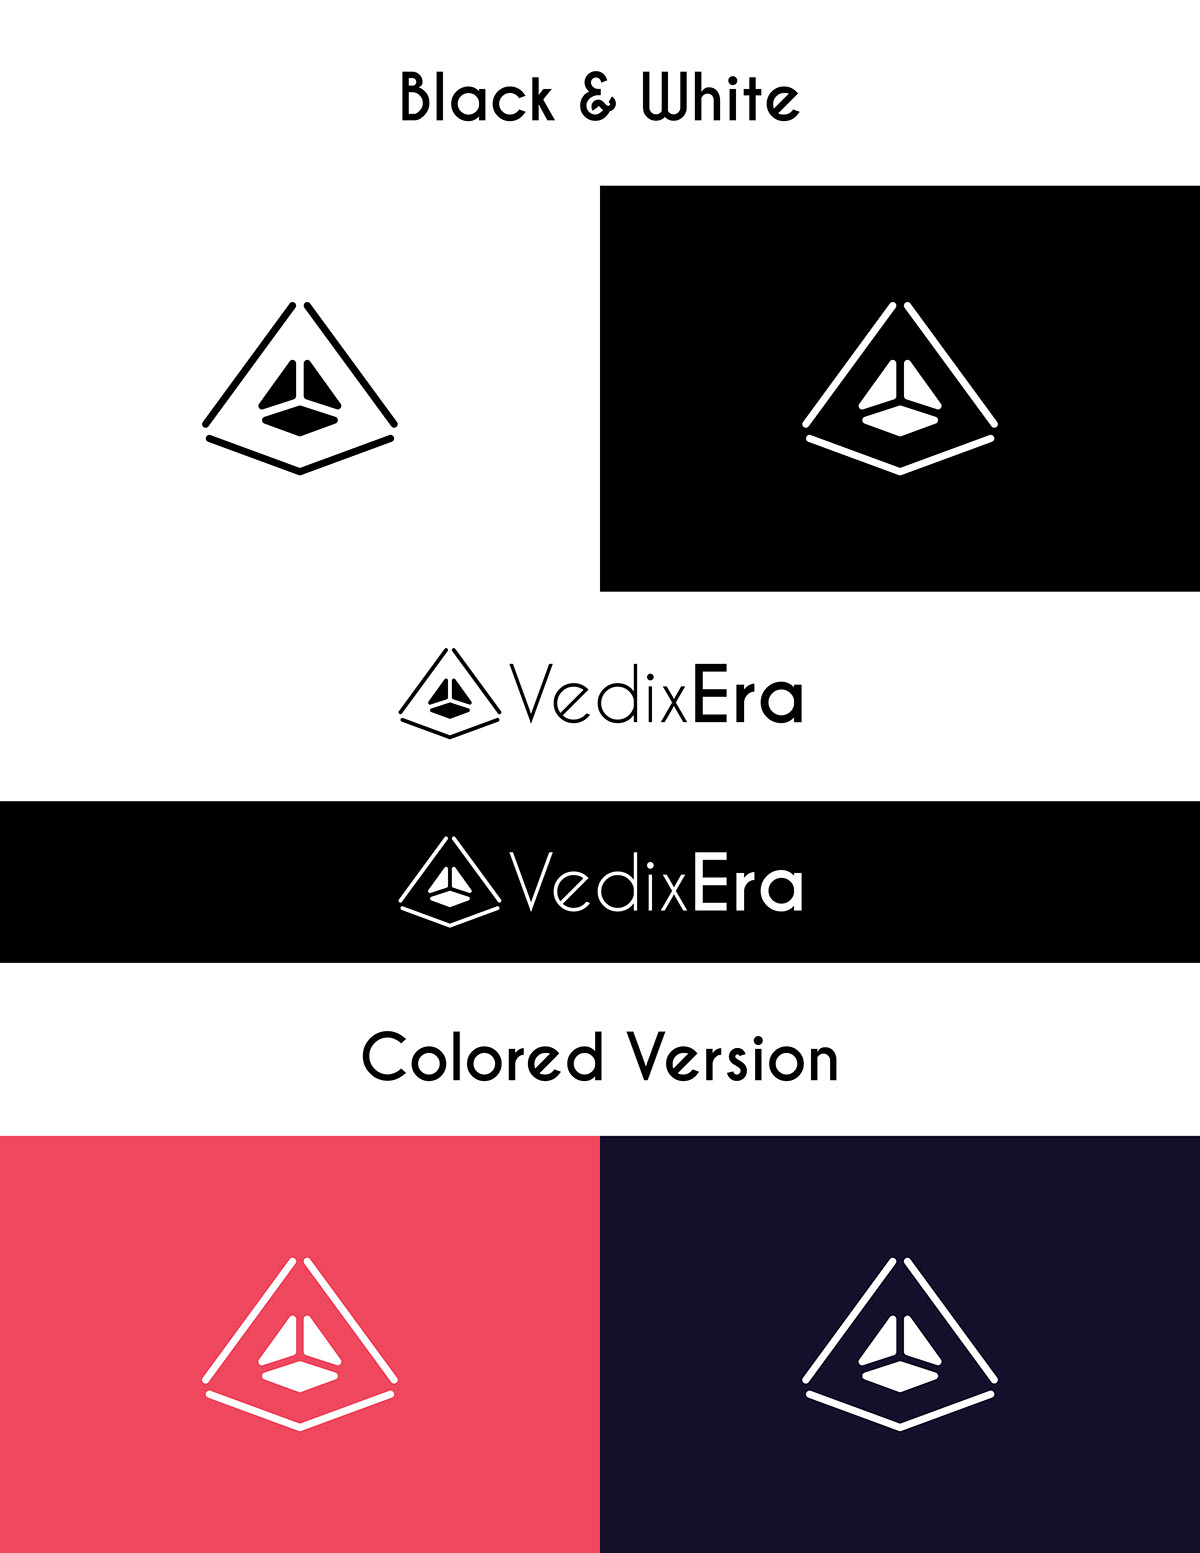 I created complete branding of vedixera.com